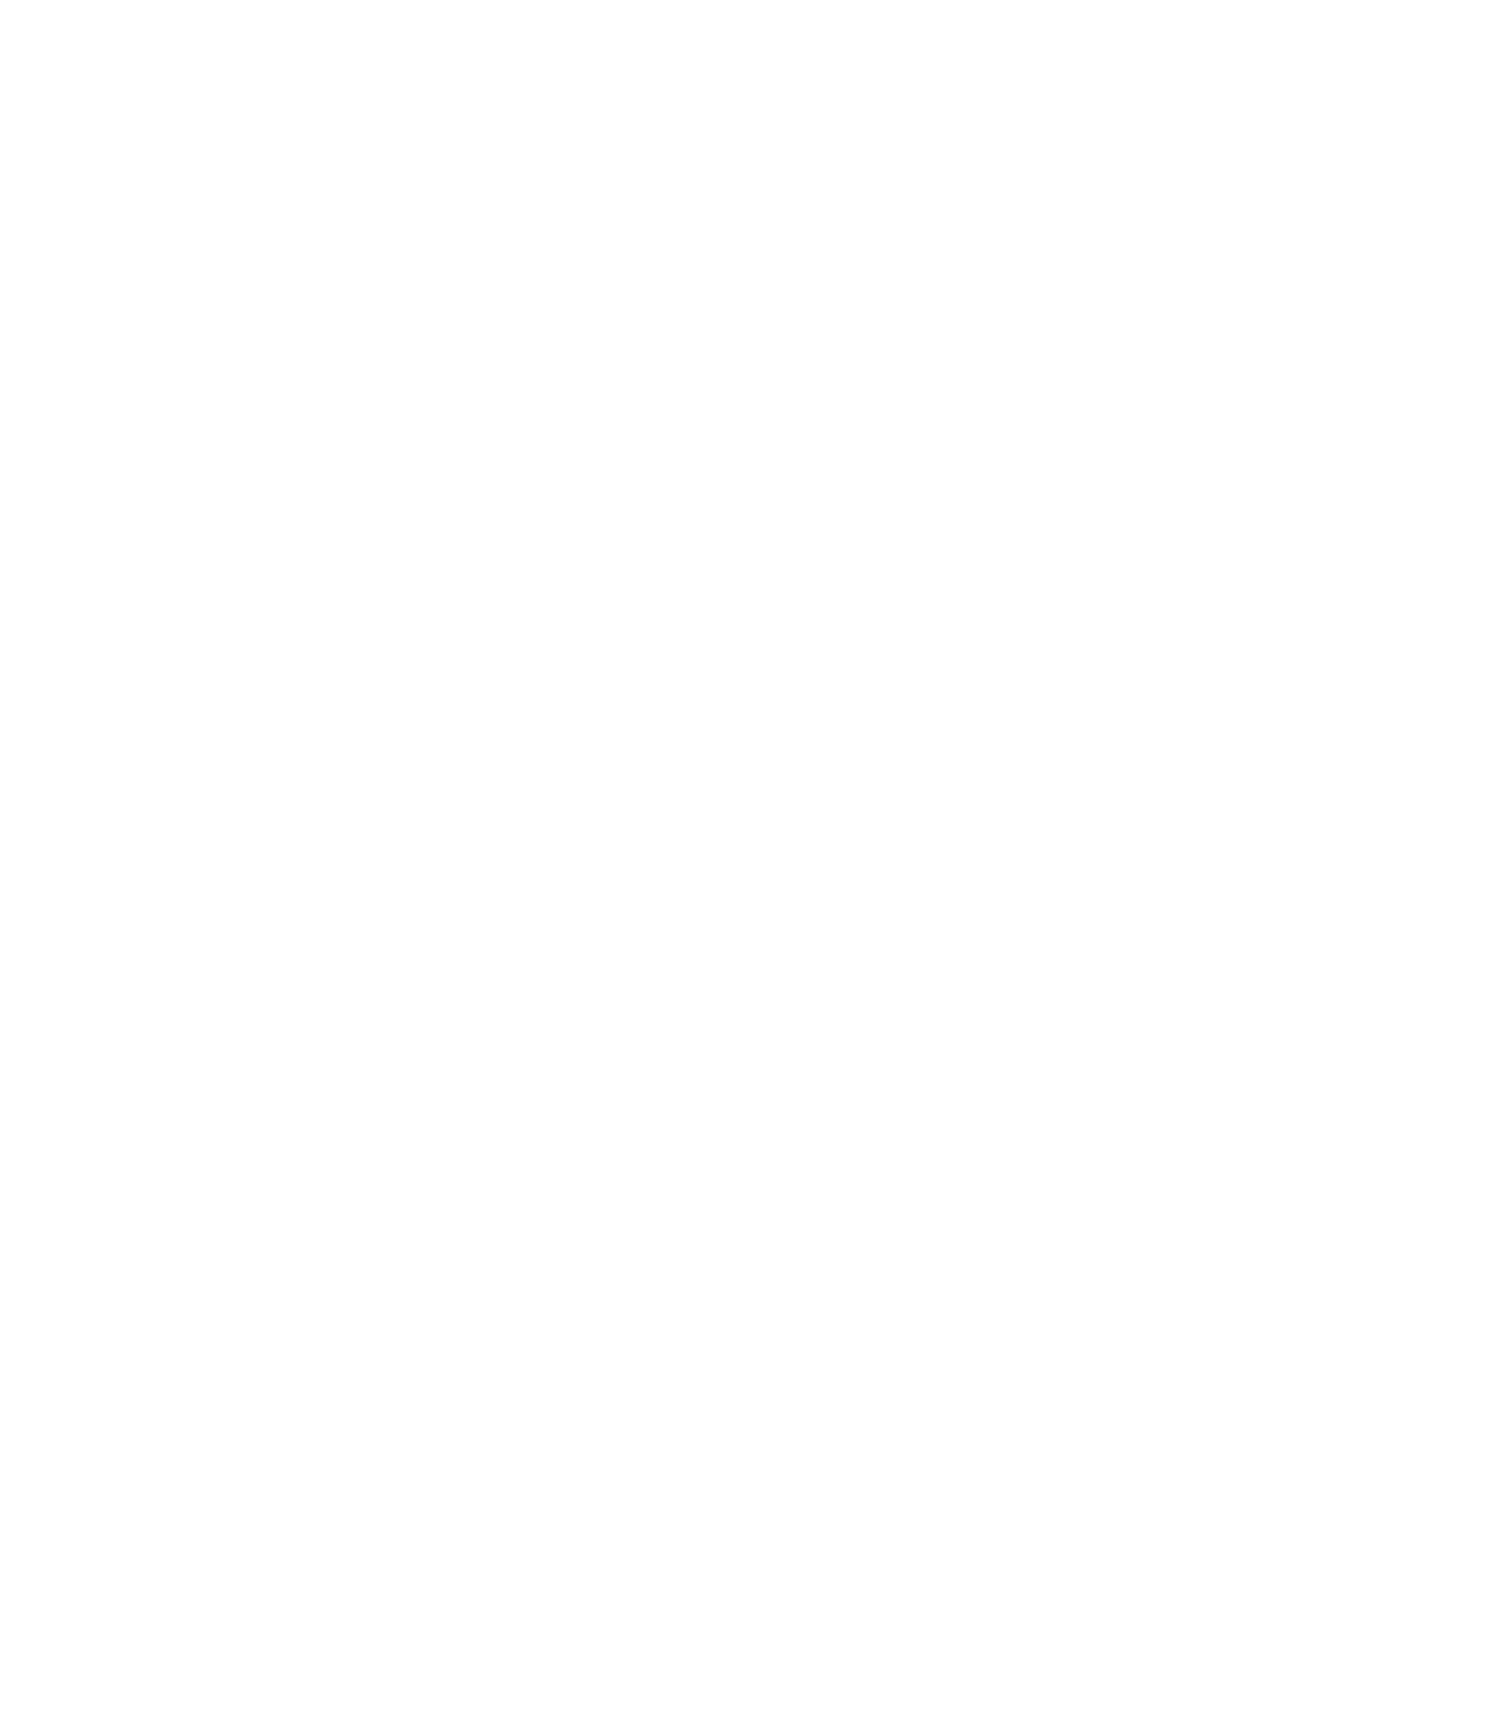 BioGro logo in white